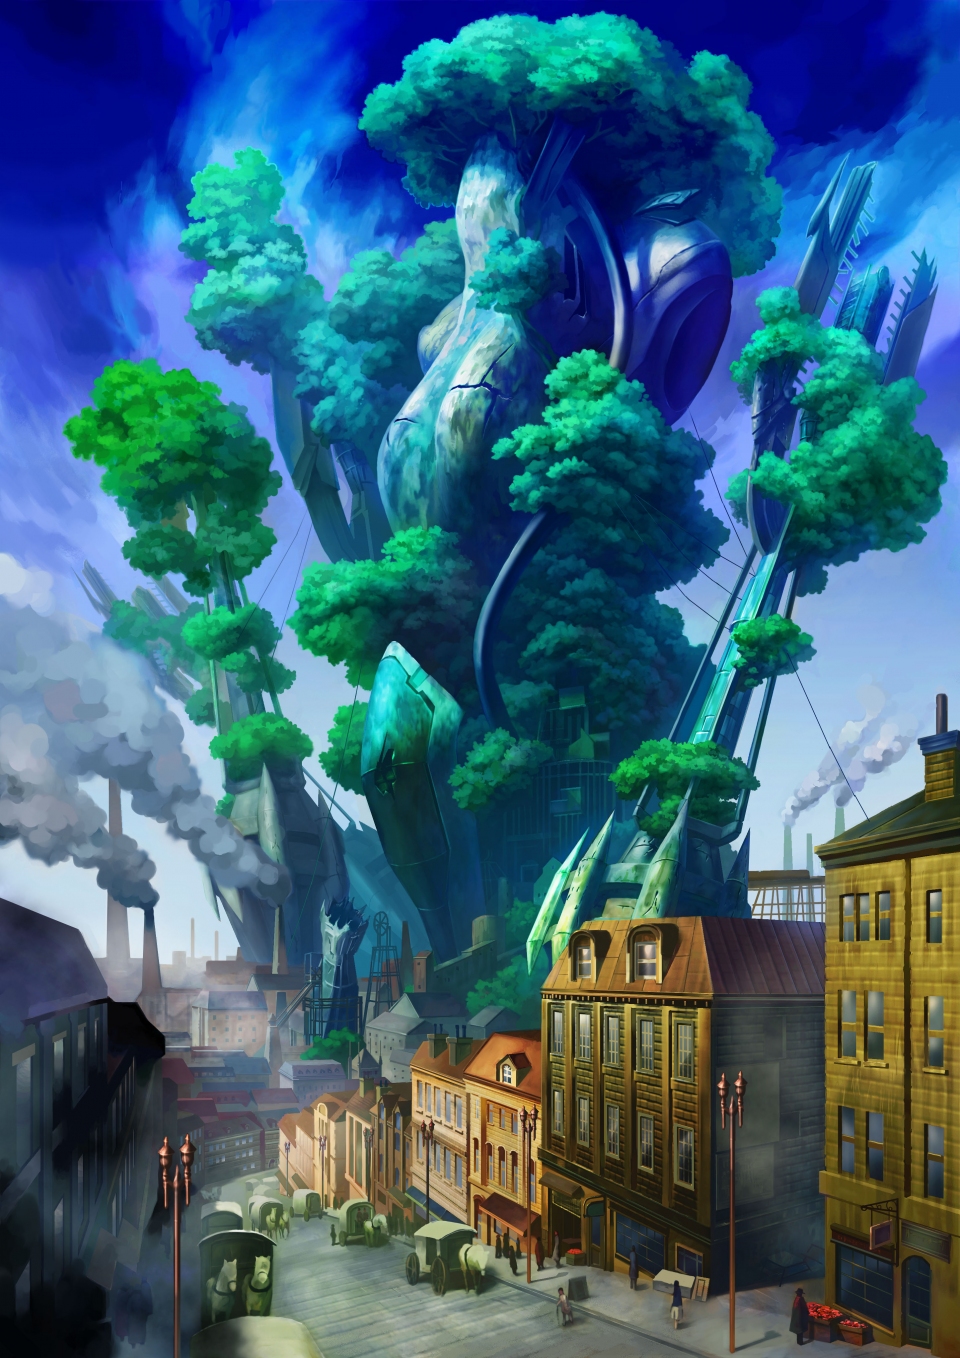 Atelier Rorona Plus: The Alchemist Of Arland для PS Vita выйдет в Европе 20 июня